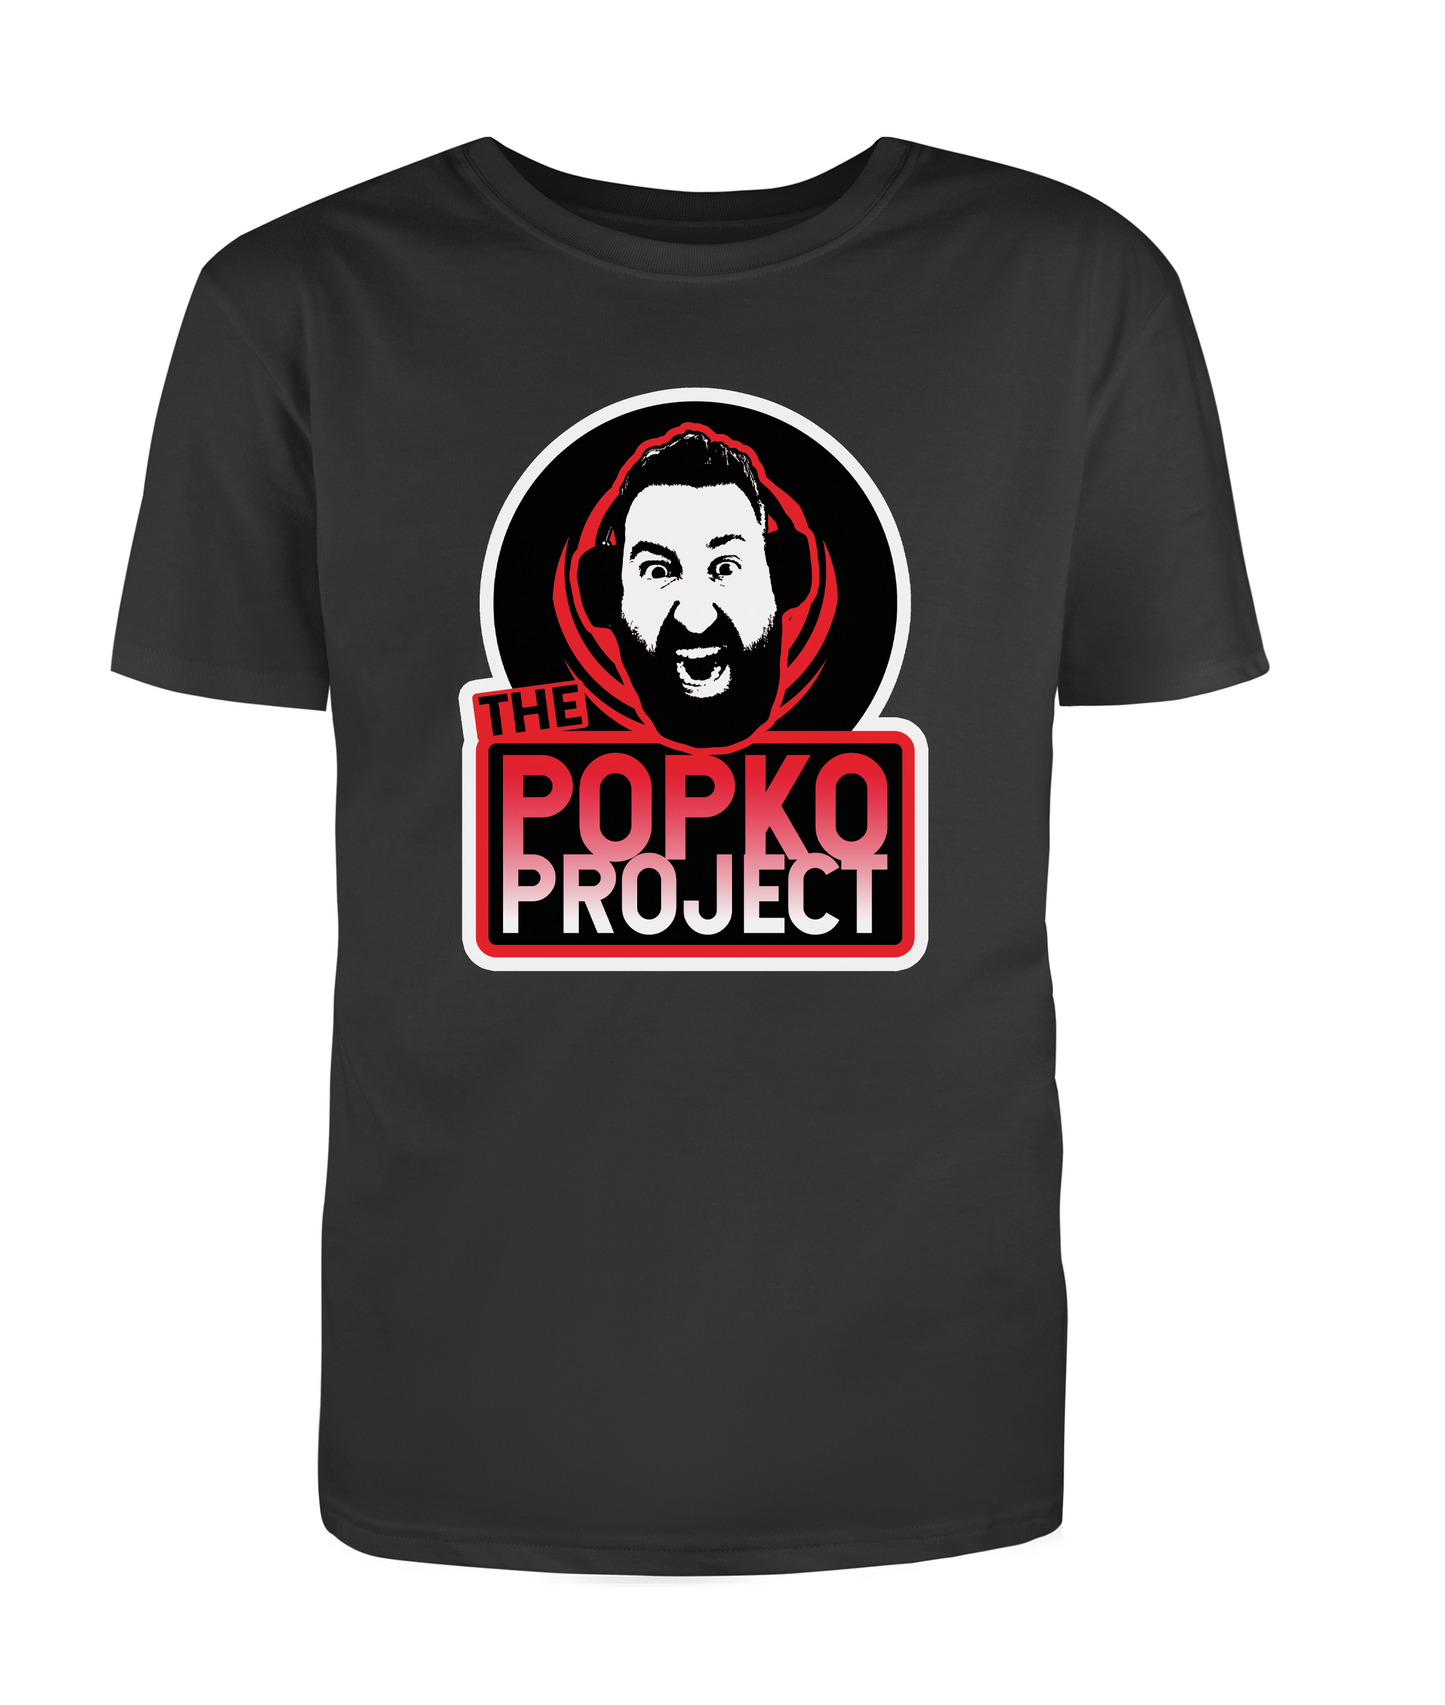 The Popko Project - Here's Popko Logo - Black T-Shirt